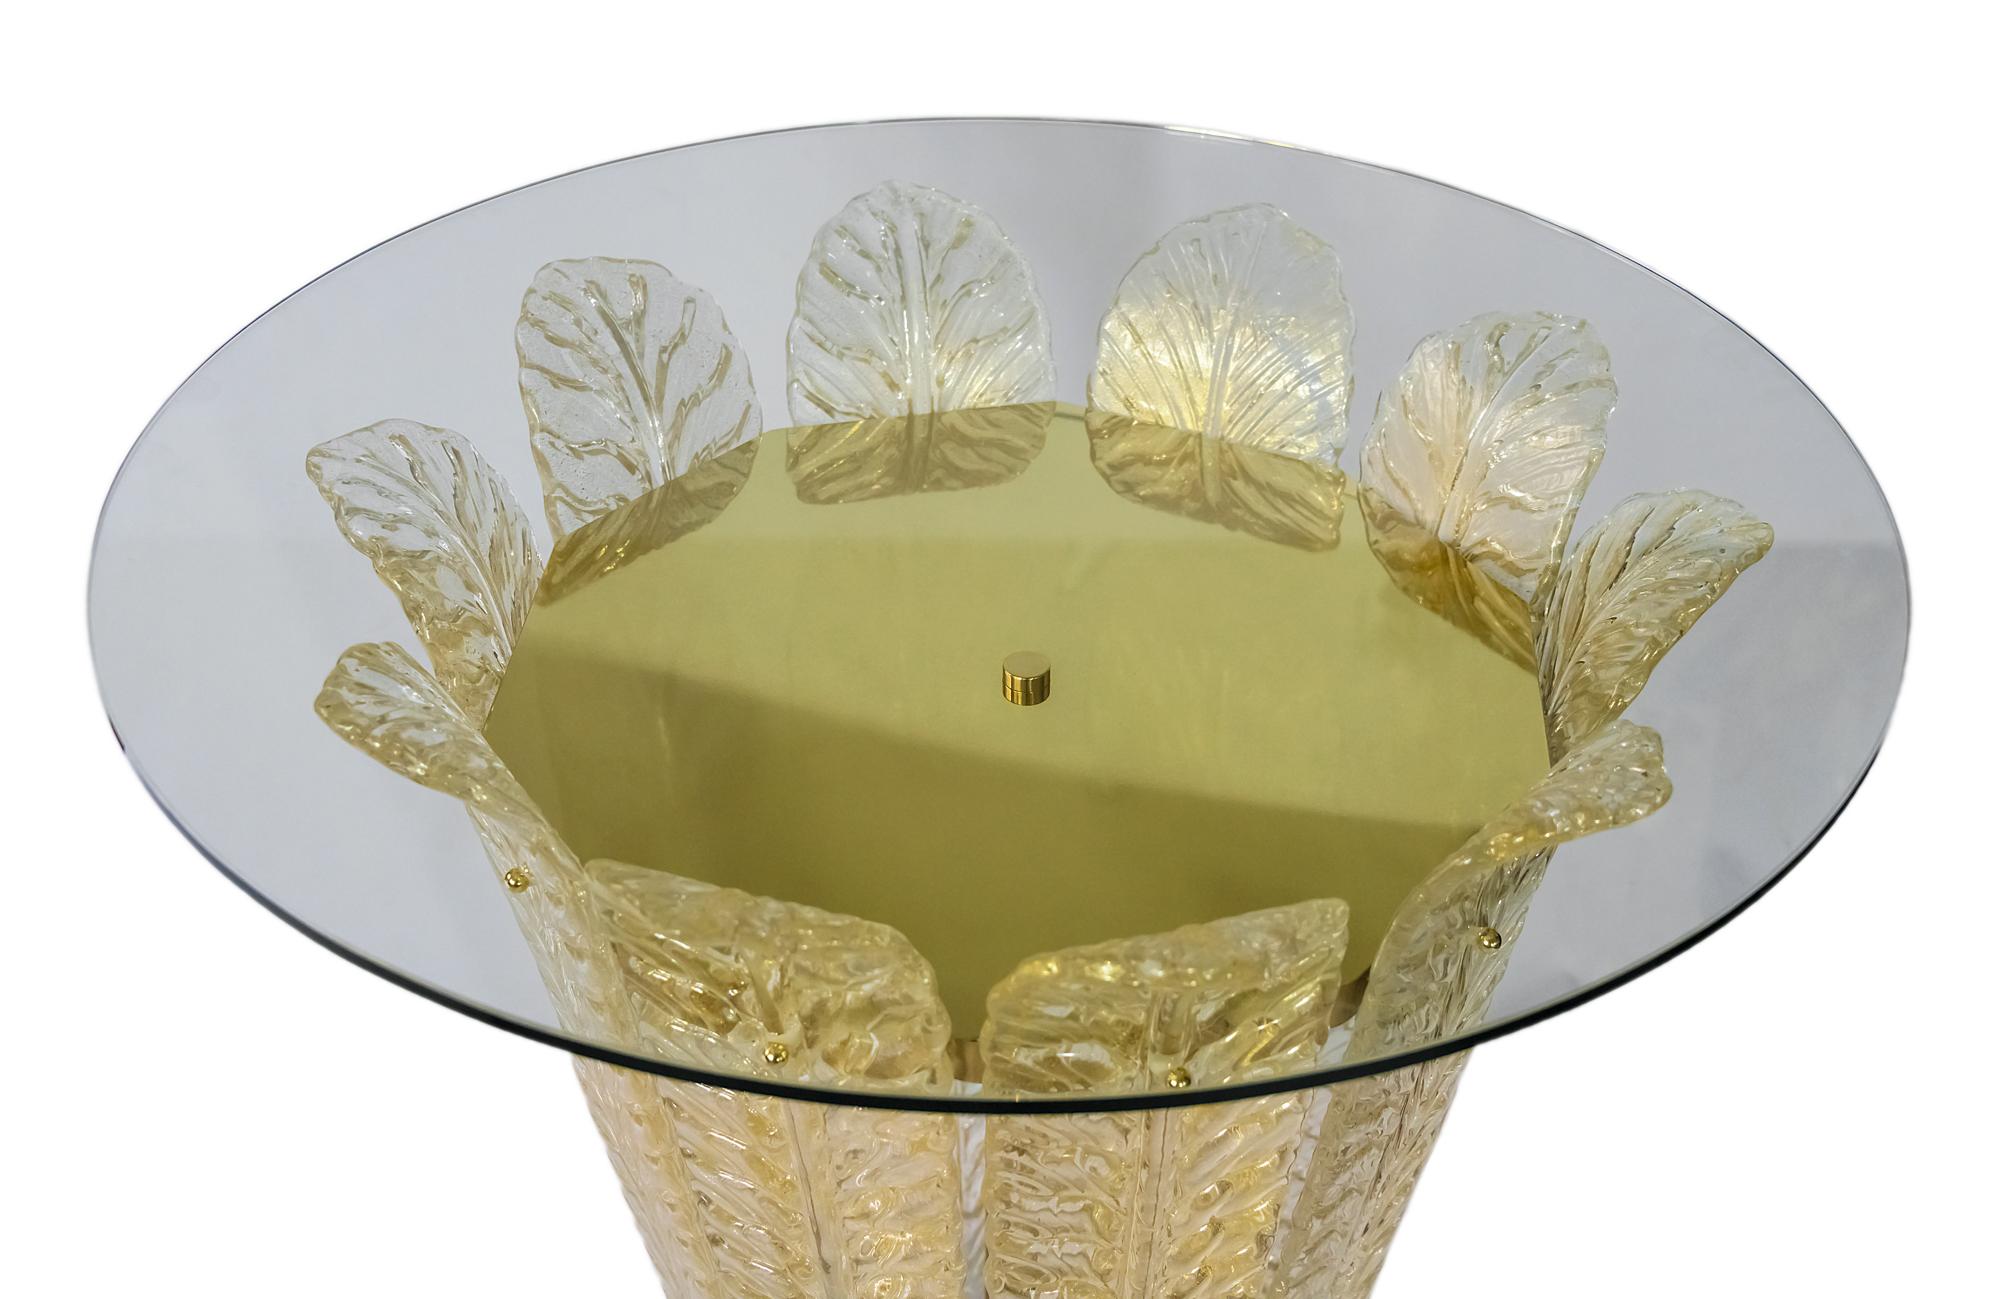 Illuminated Italian Side Table with Murano Glass Leaf Decor For Sale 2